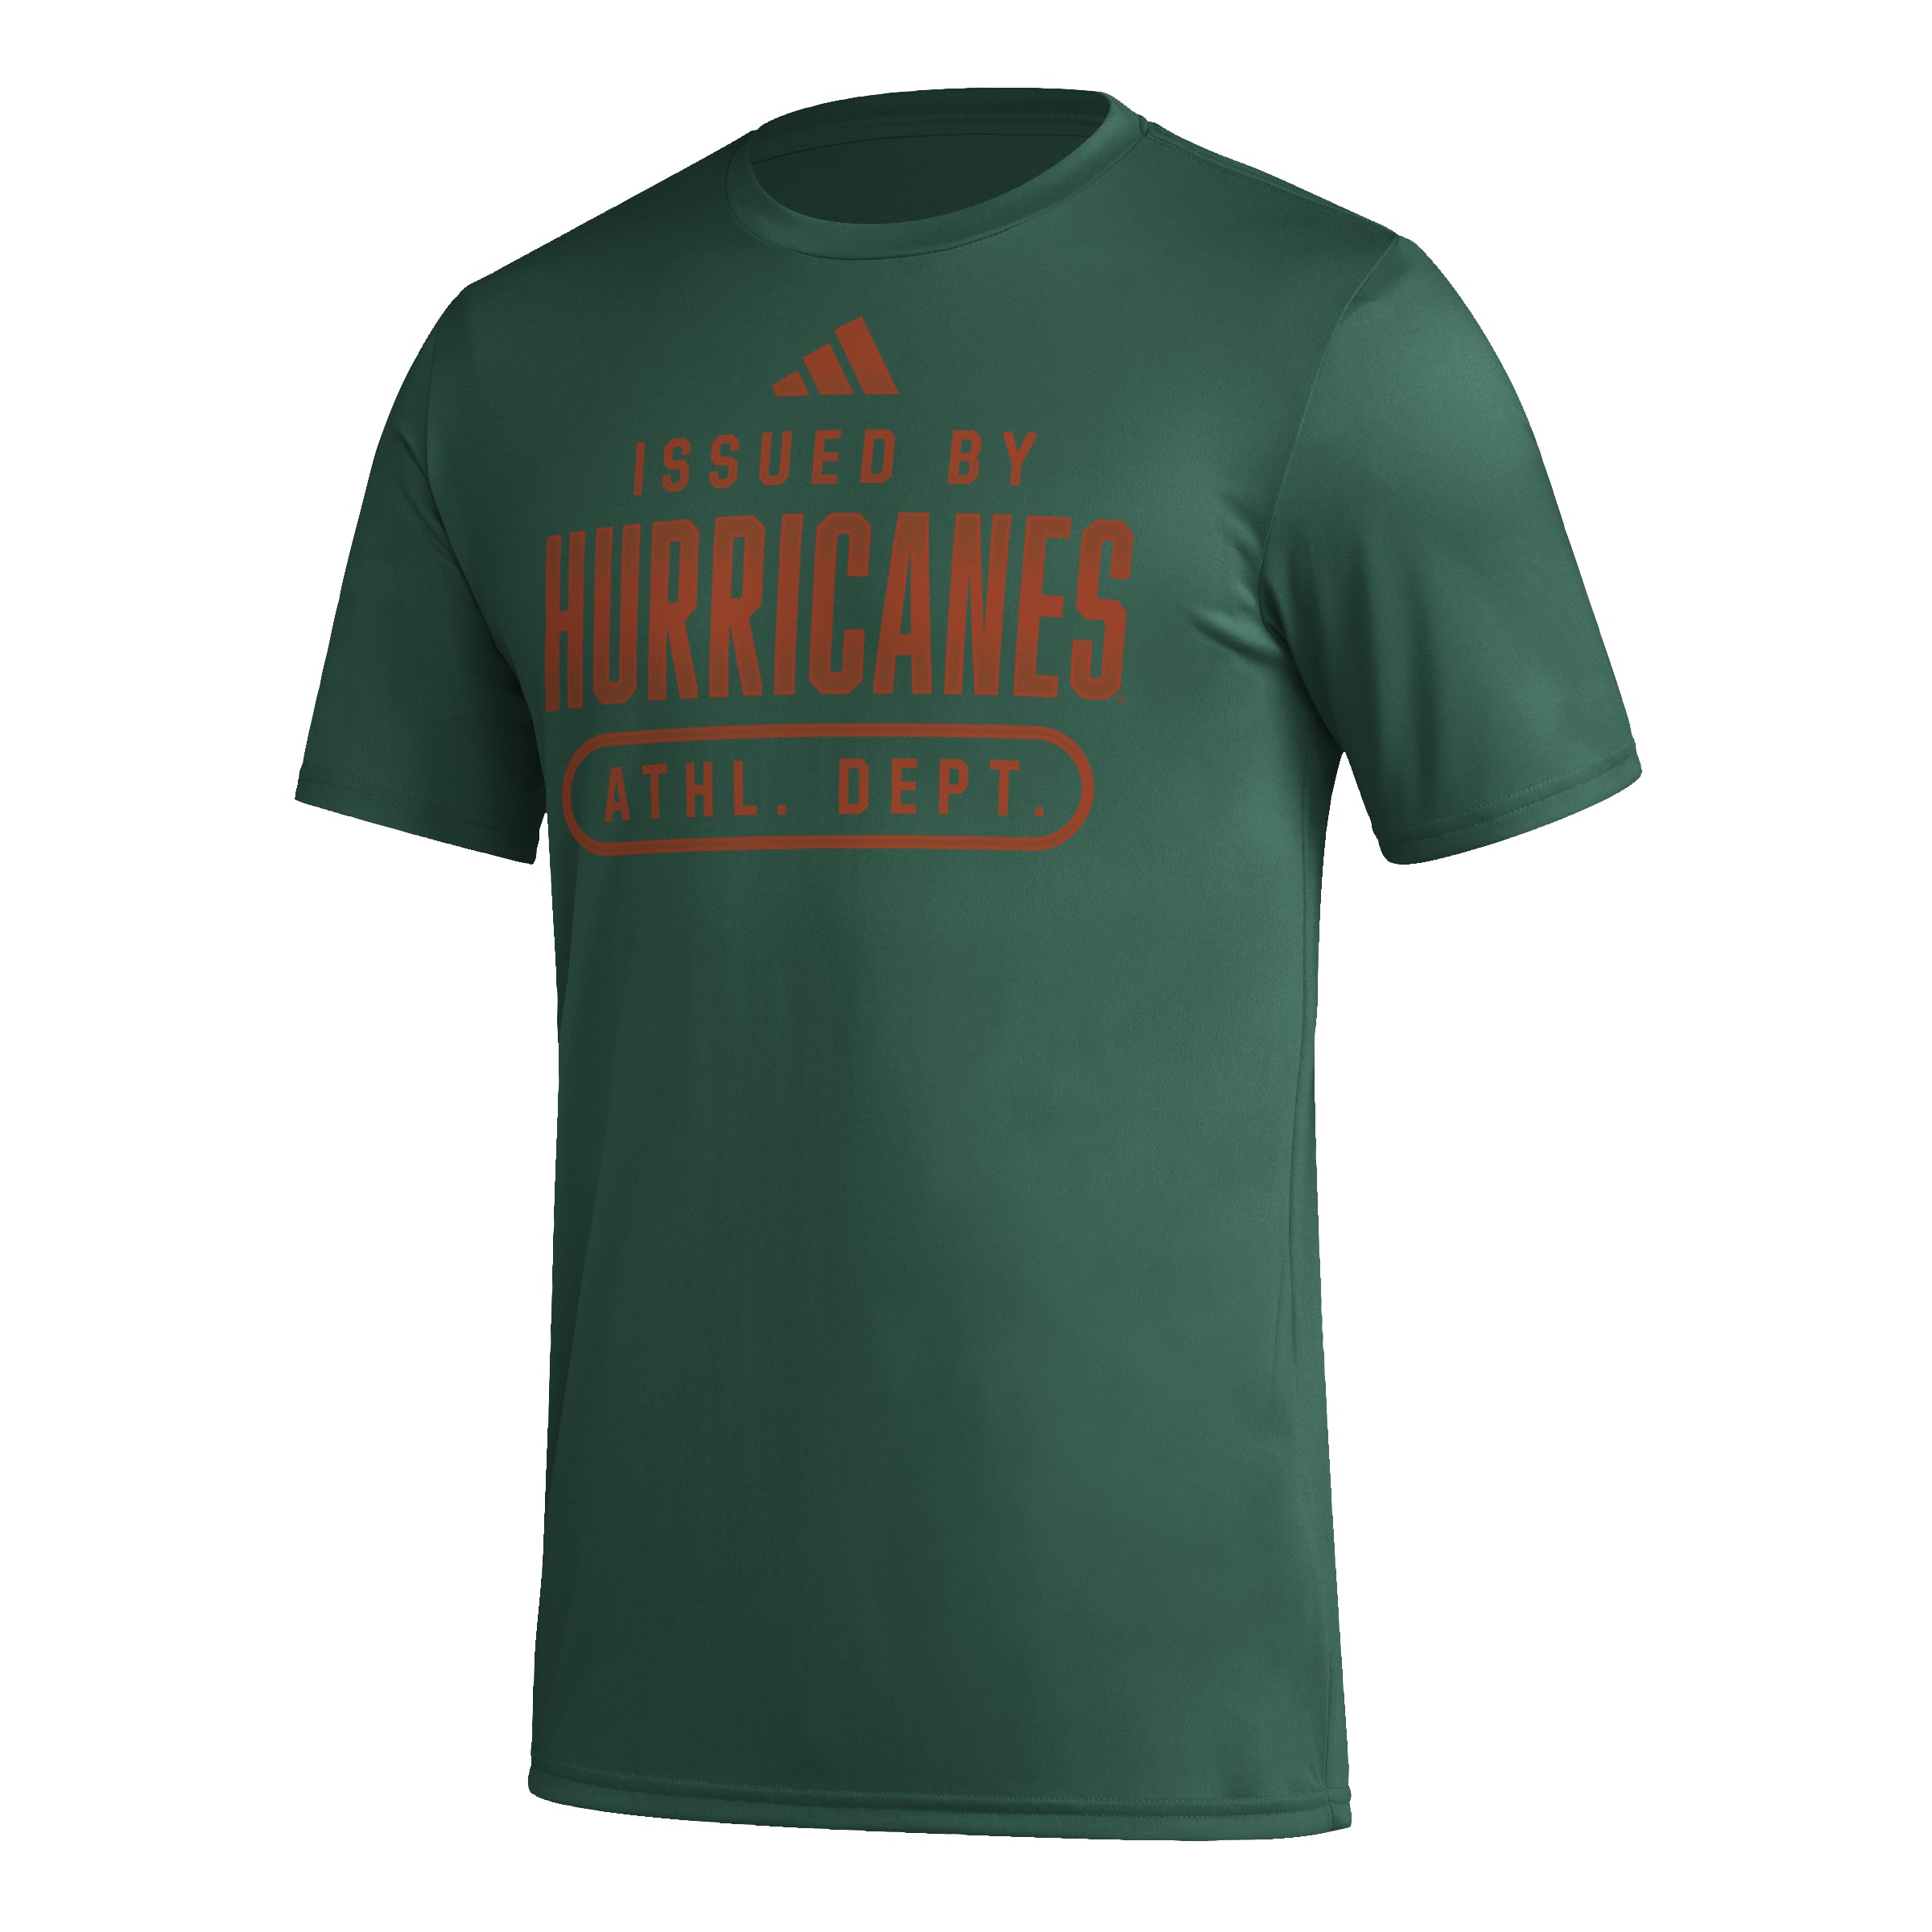 Miami Hurricanes adidas Aeroready Pregame Issued By T-Shirt - Green